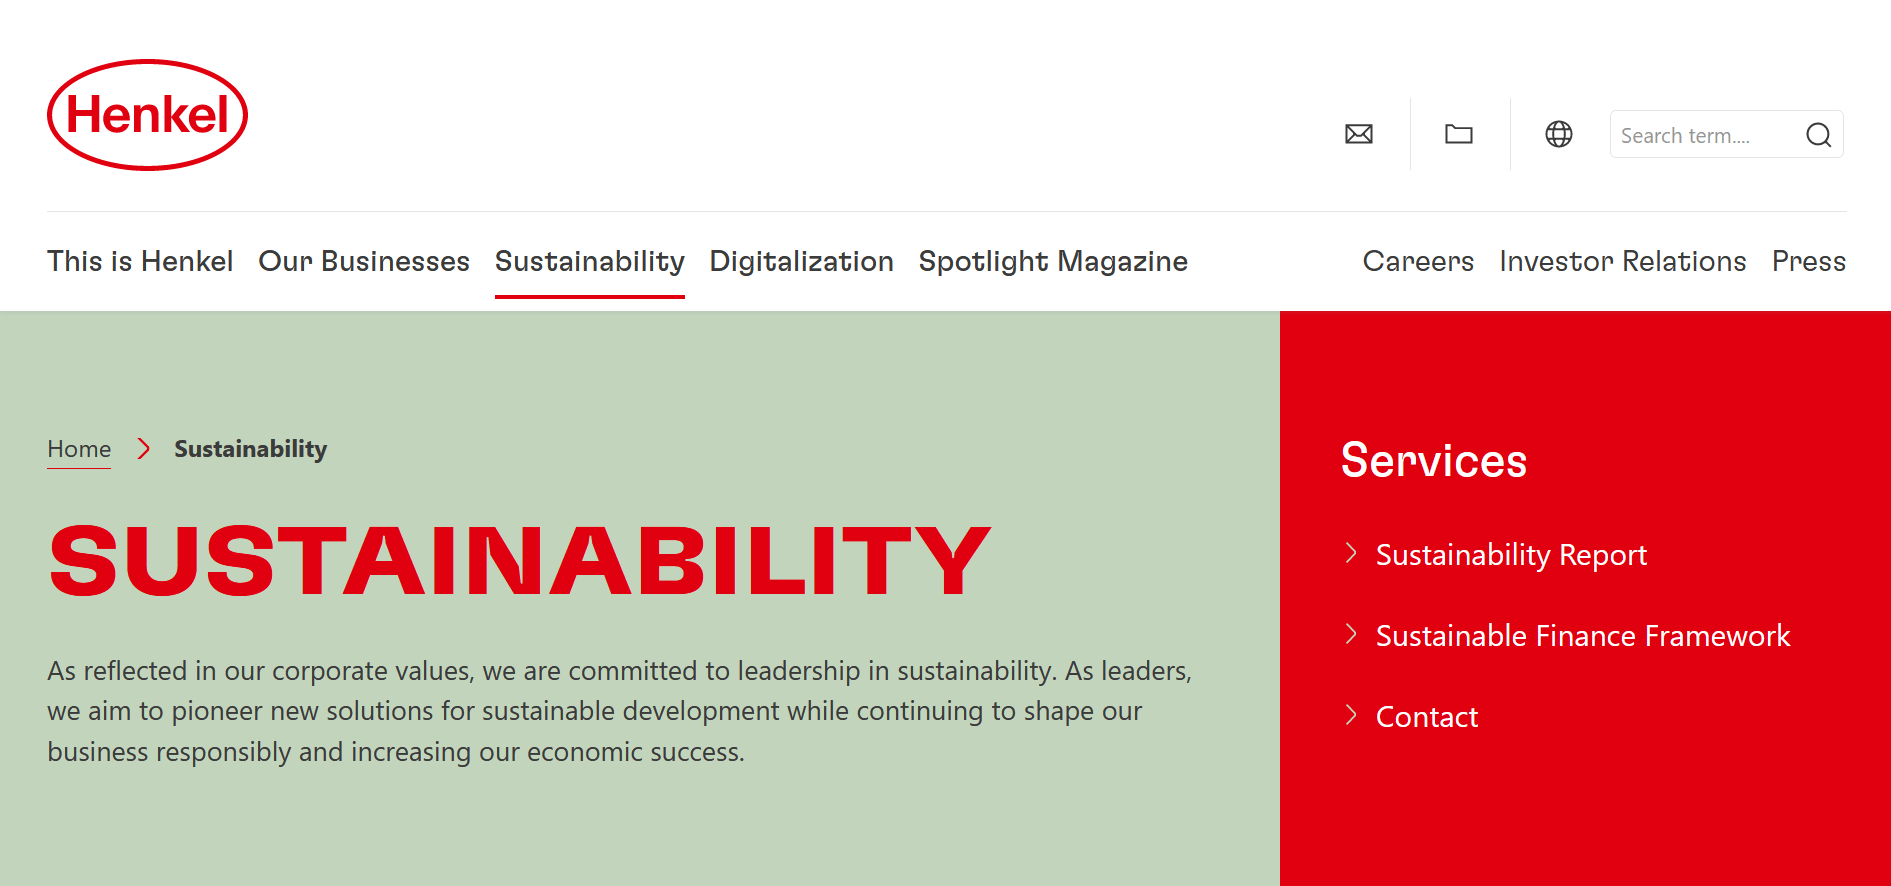 Screenshot of Henkel website: The “Sustainability” section